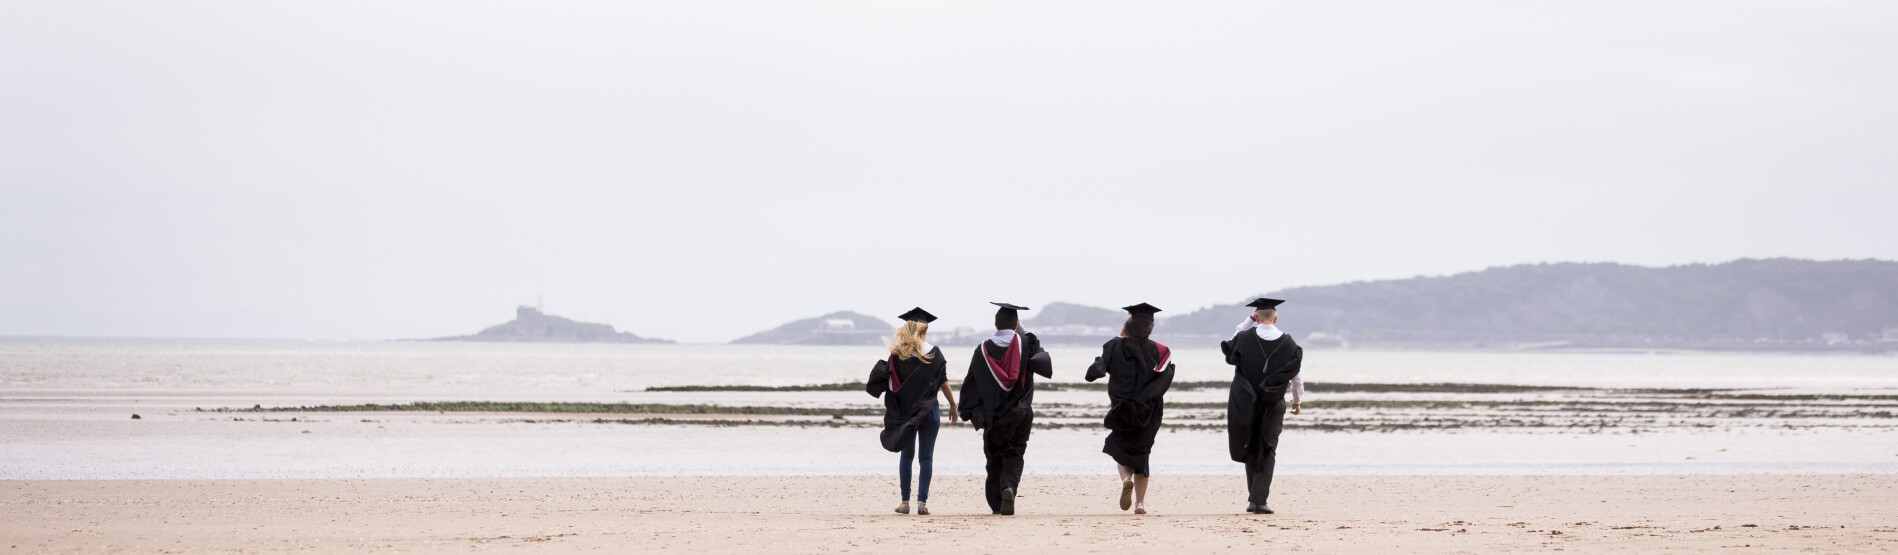 Graduates on beach